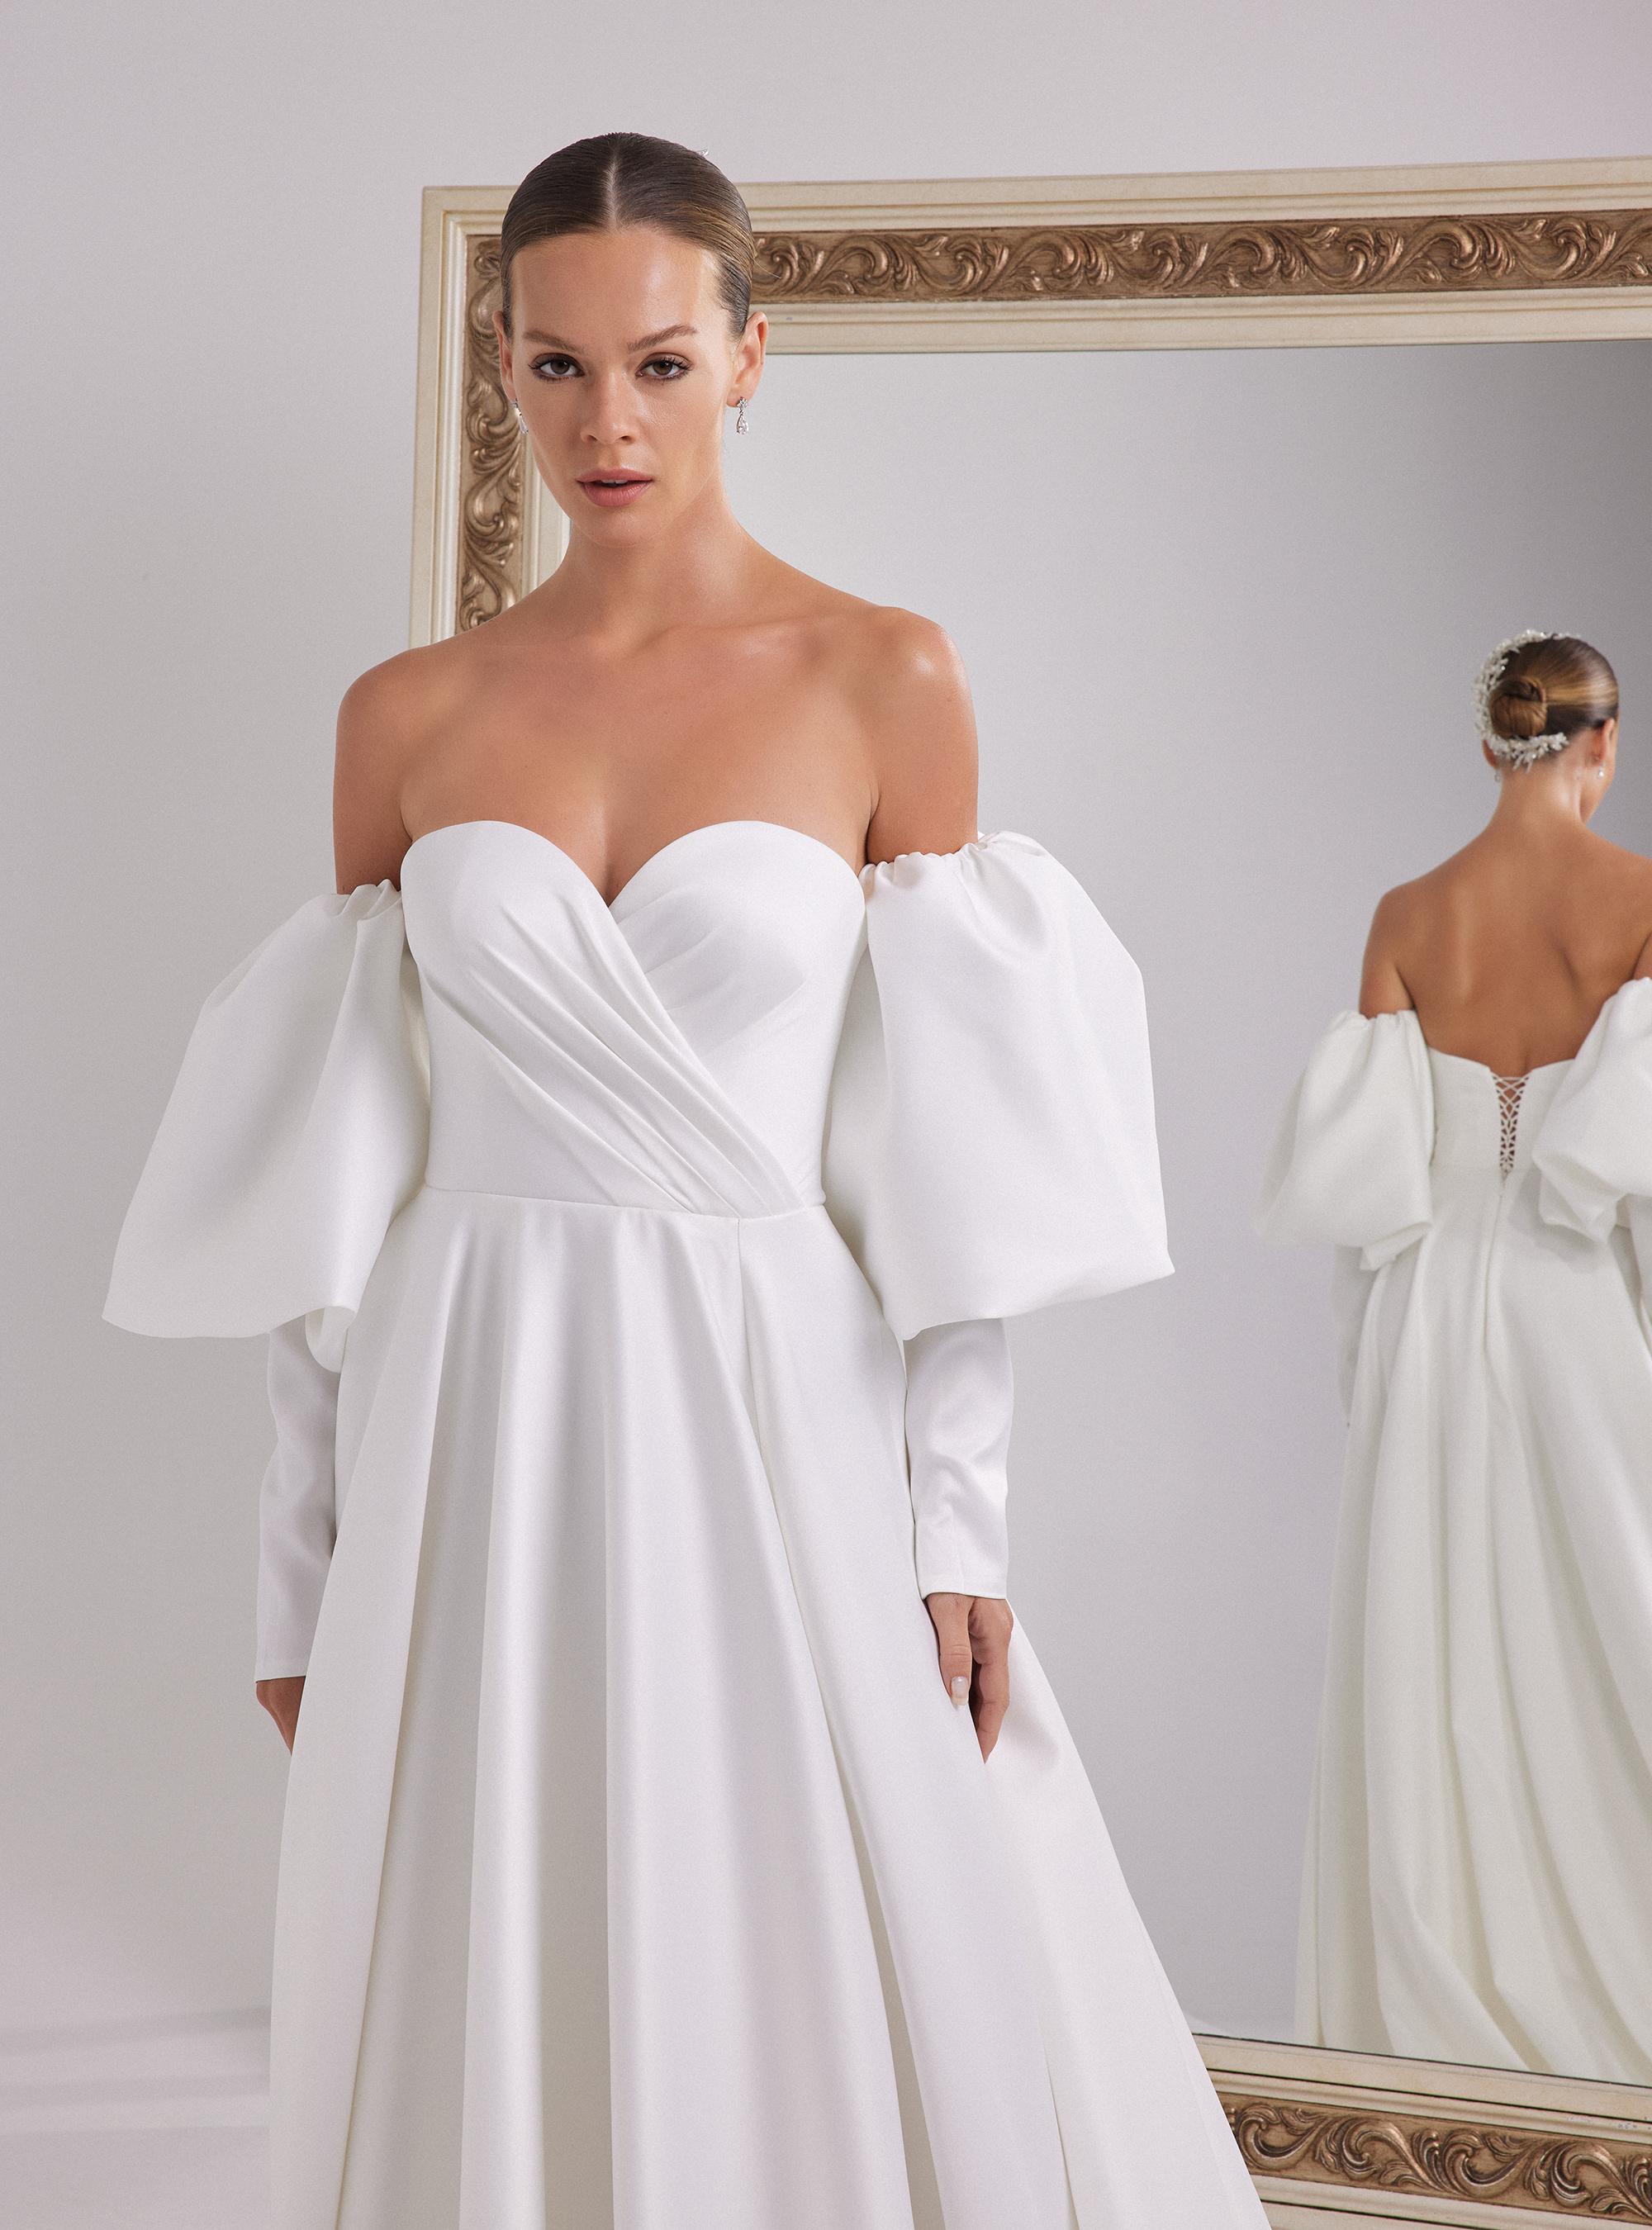 Online Store of Nova Bella Discover Wide Range of Bridal Gowns